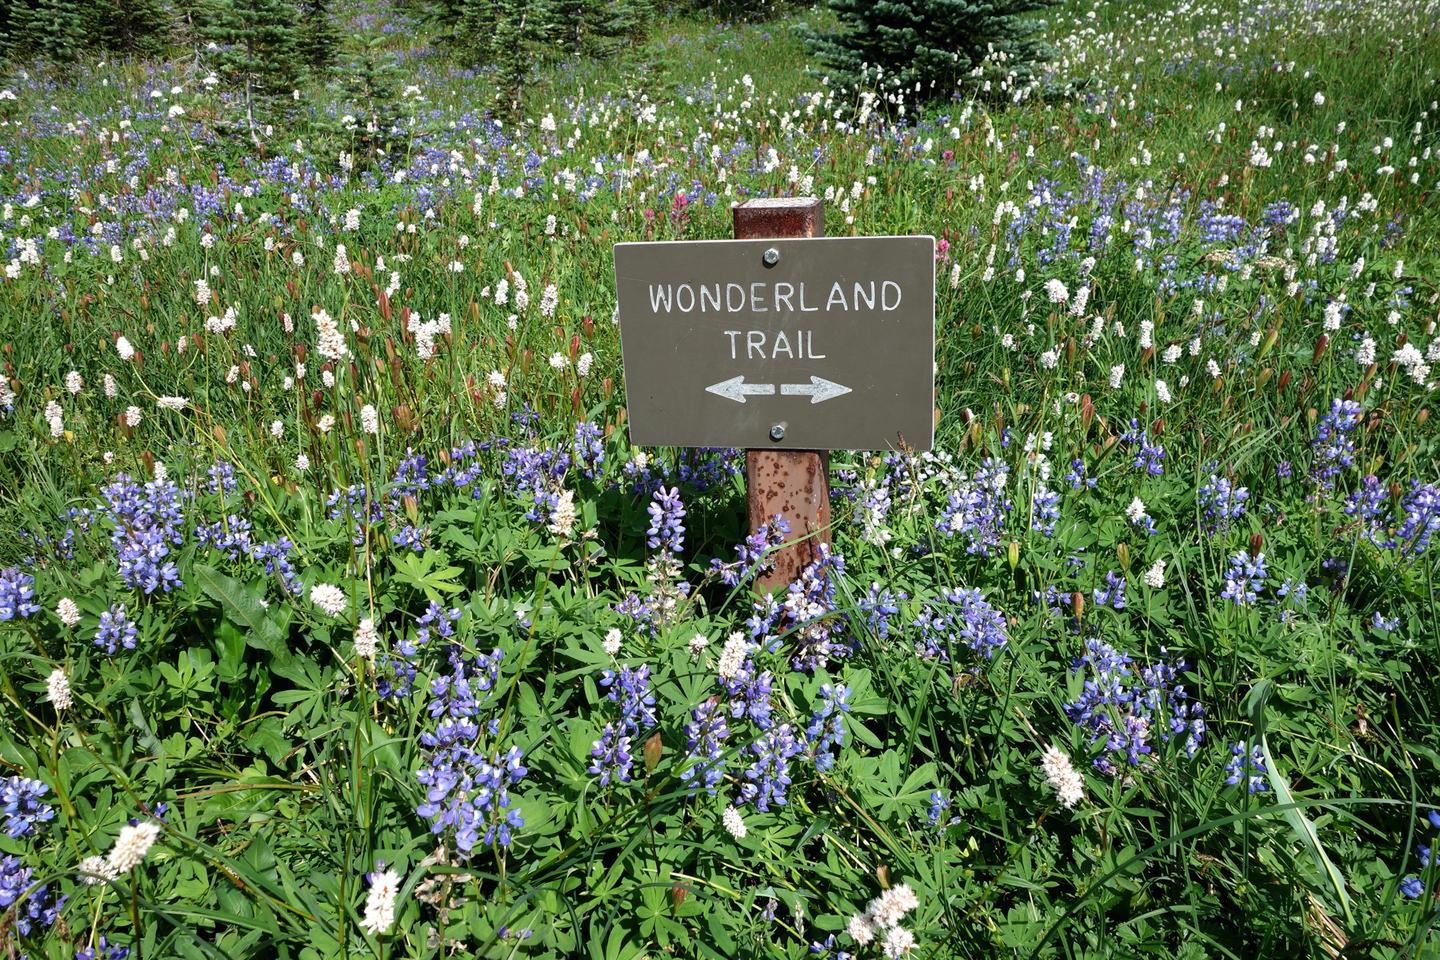 Wildflower Meadow Along the Wonderland TrailBoth the Wonderland Trail and subalpine meadows encircle Mount Rainier. Summertime blooms splatter the hillsides with color.